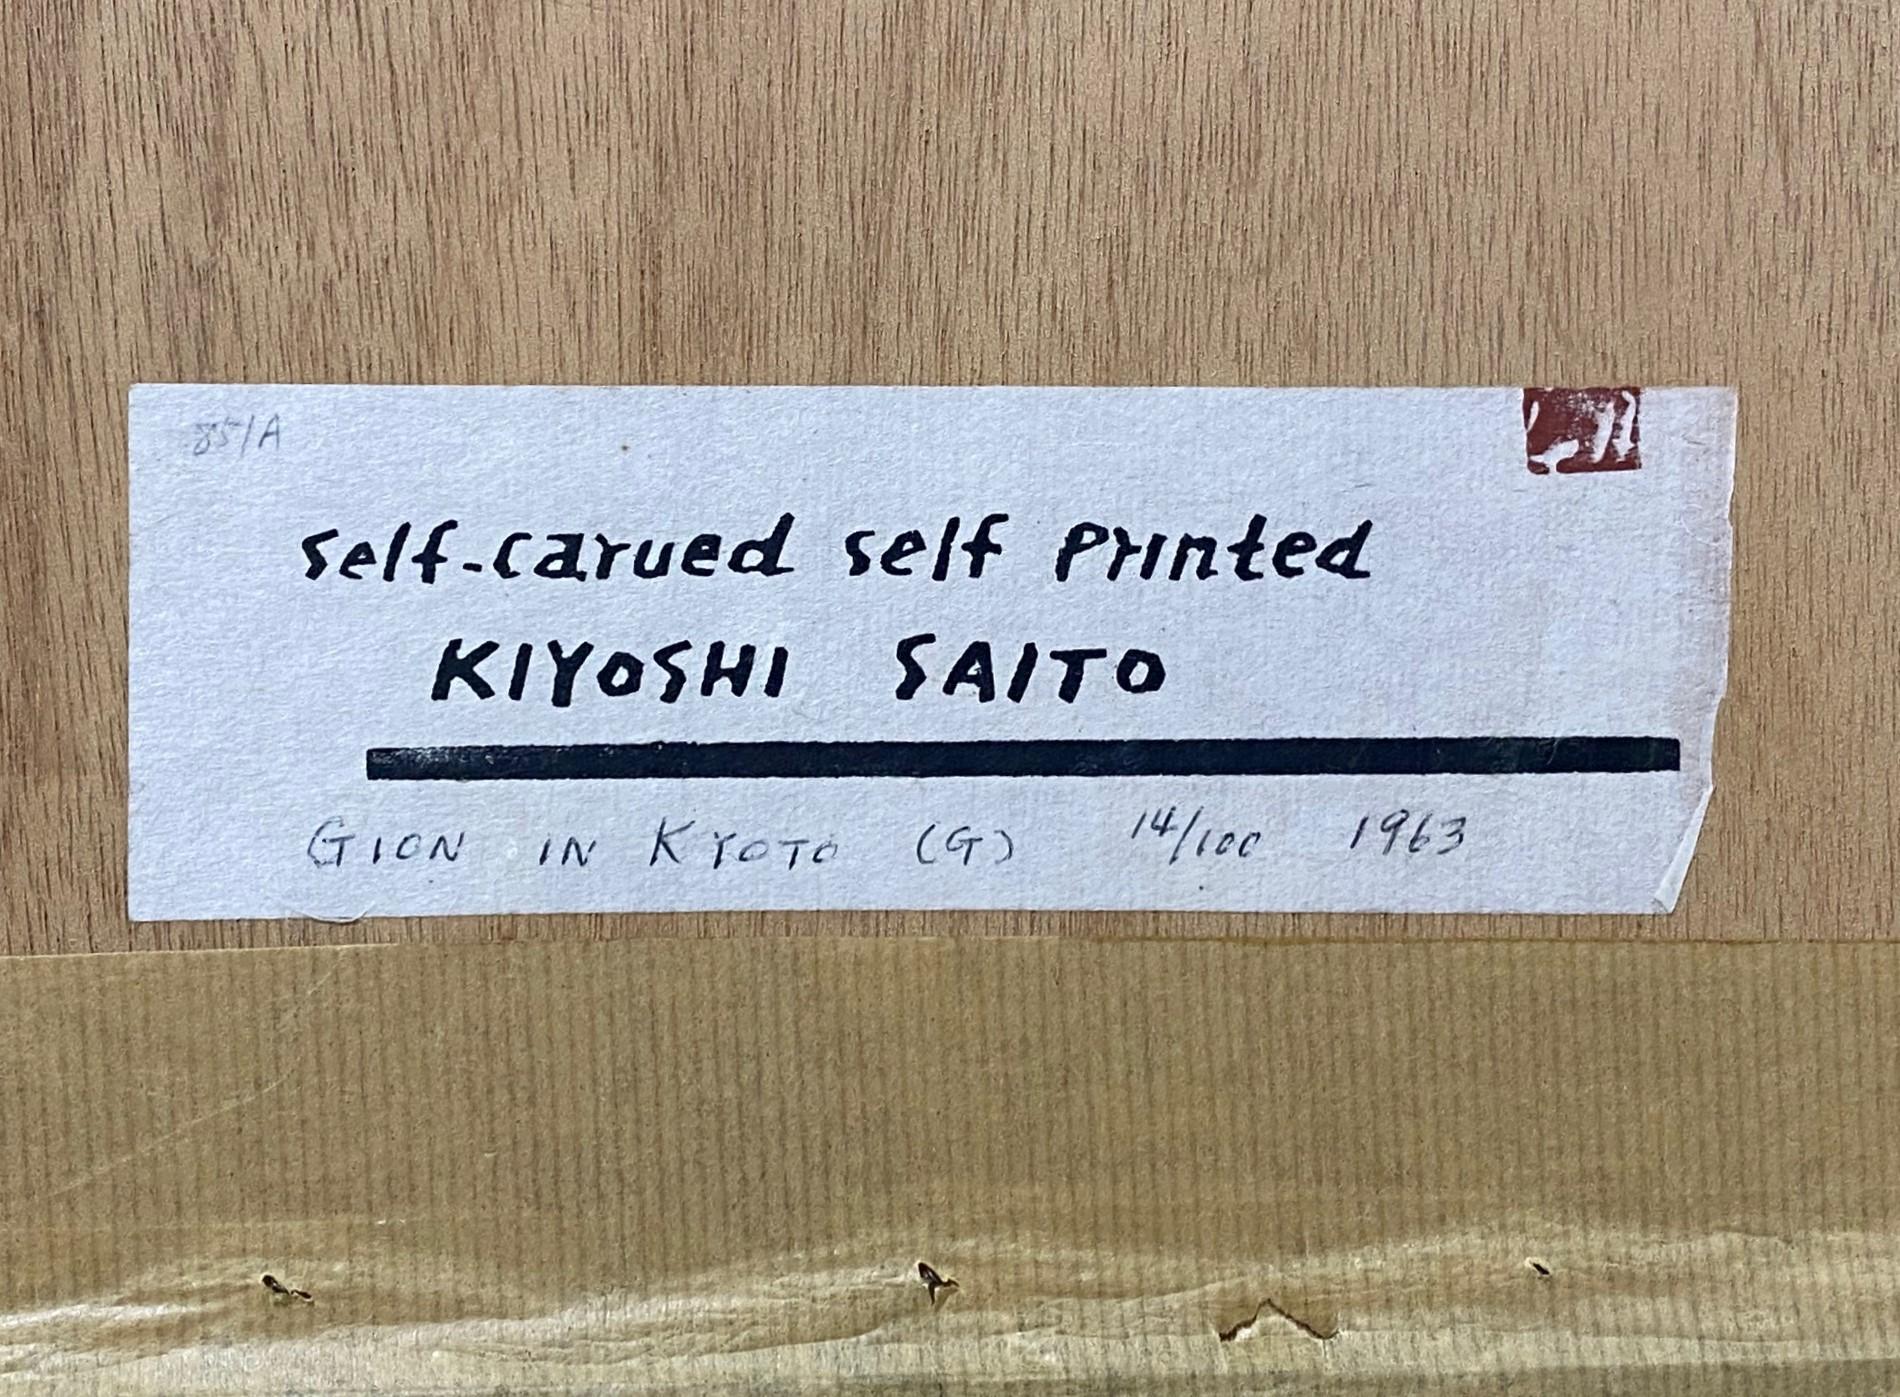 Kiyoshi Saito Signed Limited Ed Japanese Woodblock Print Gion in Kyoto (G), 1963 For Sale 6